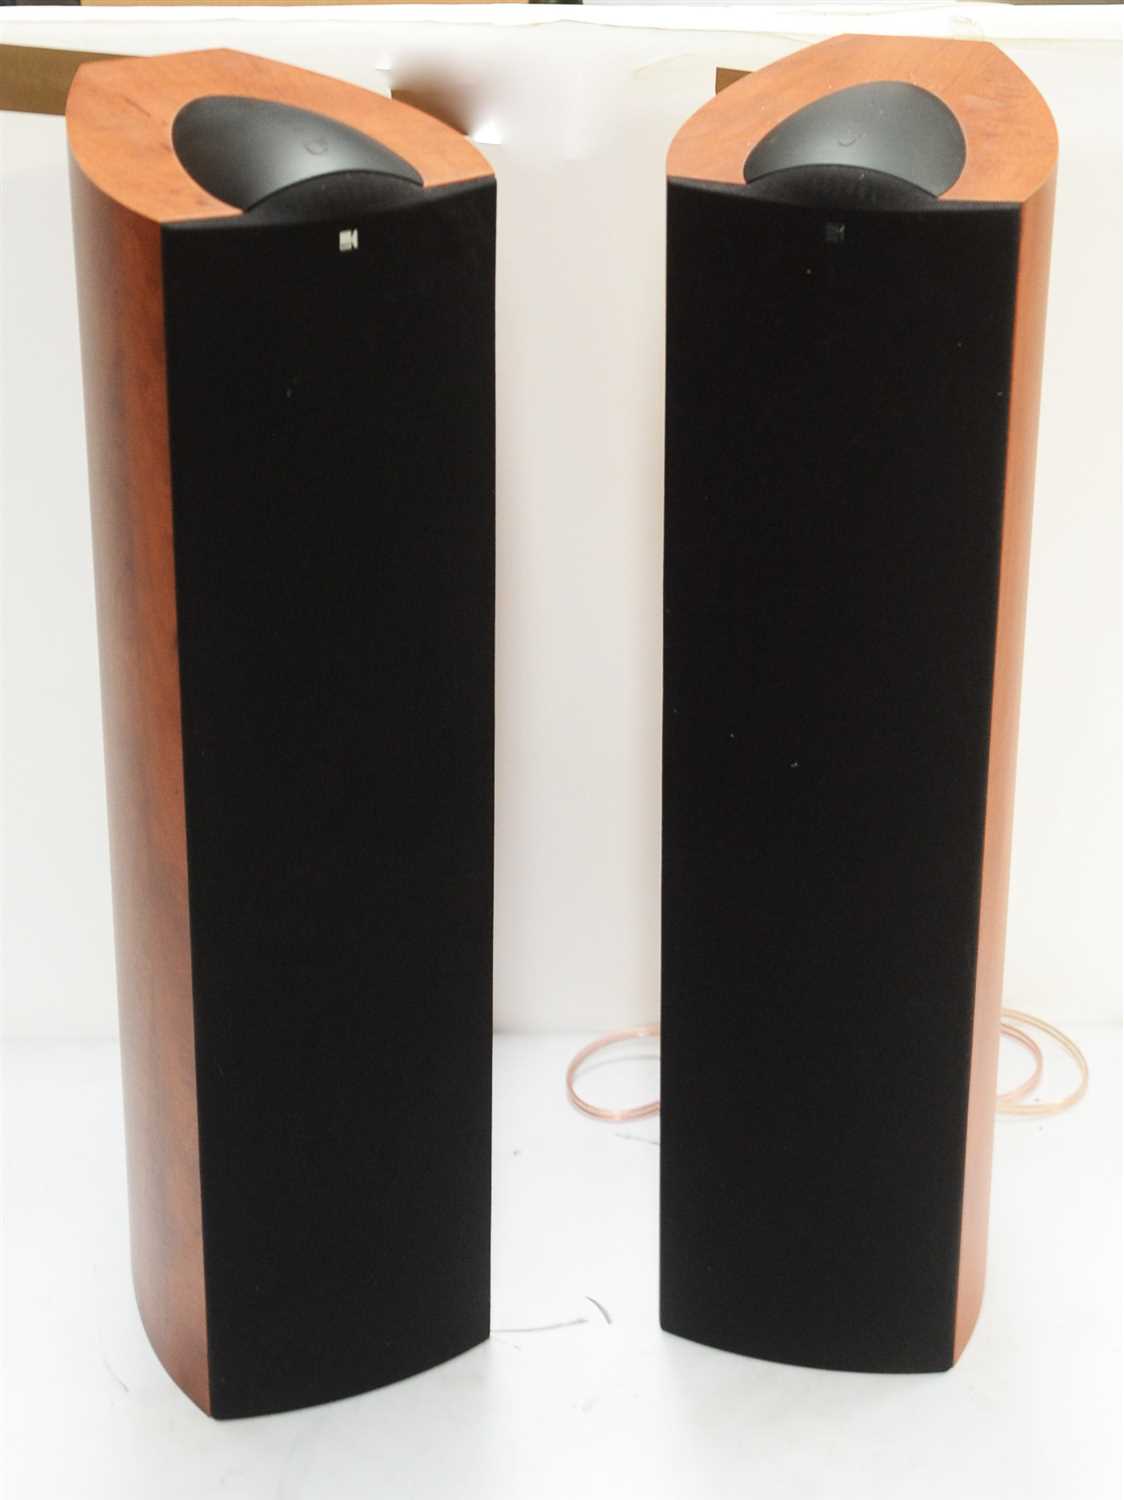 Lot 46 - A pair of KEF Q5 speakers.